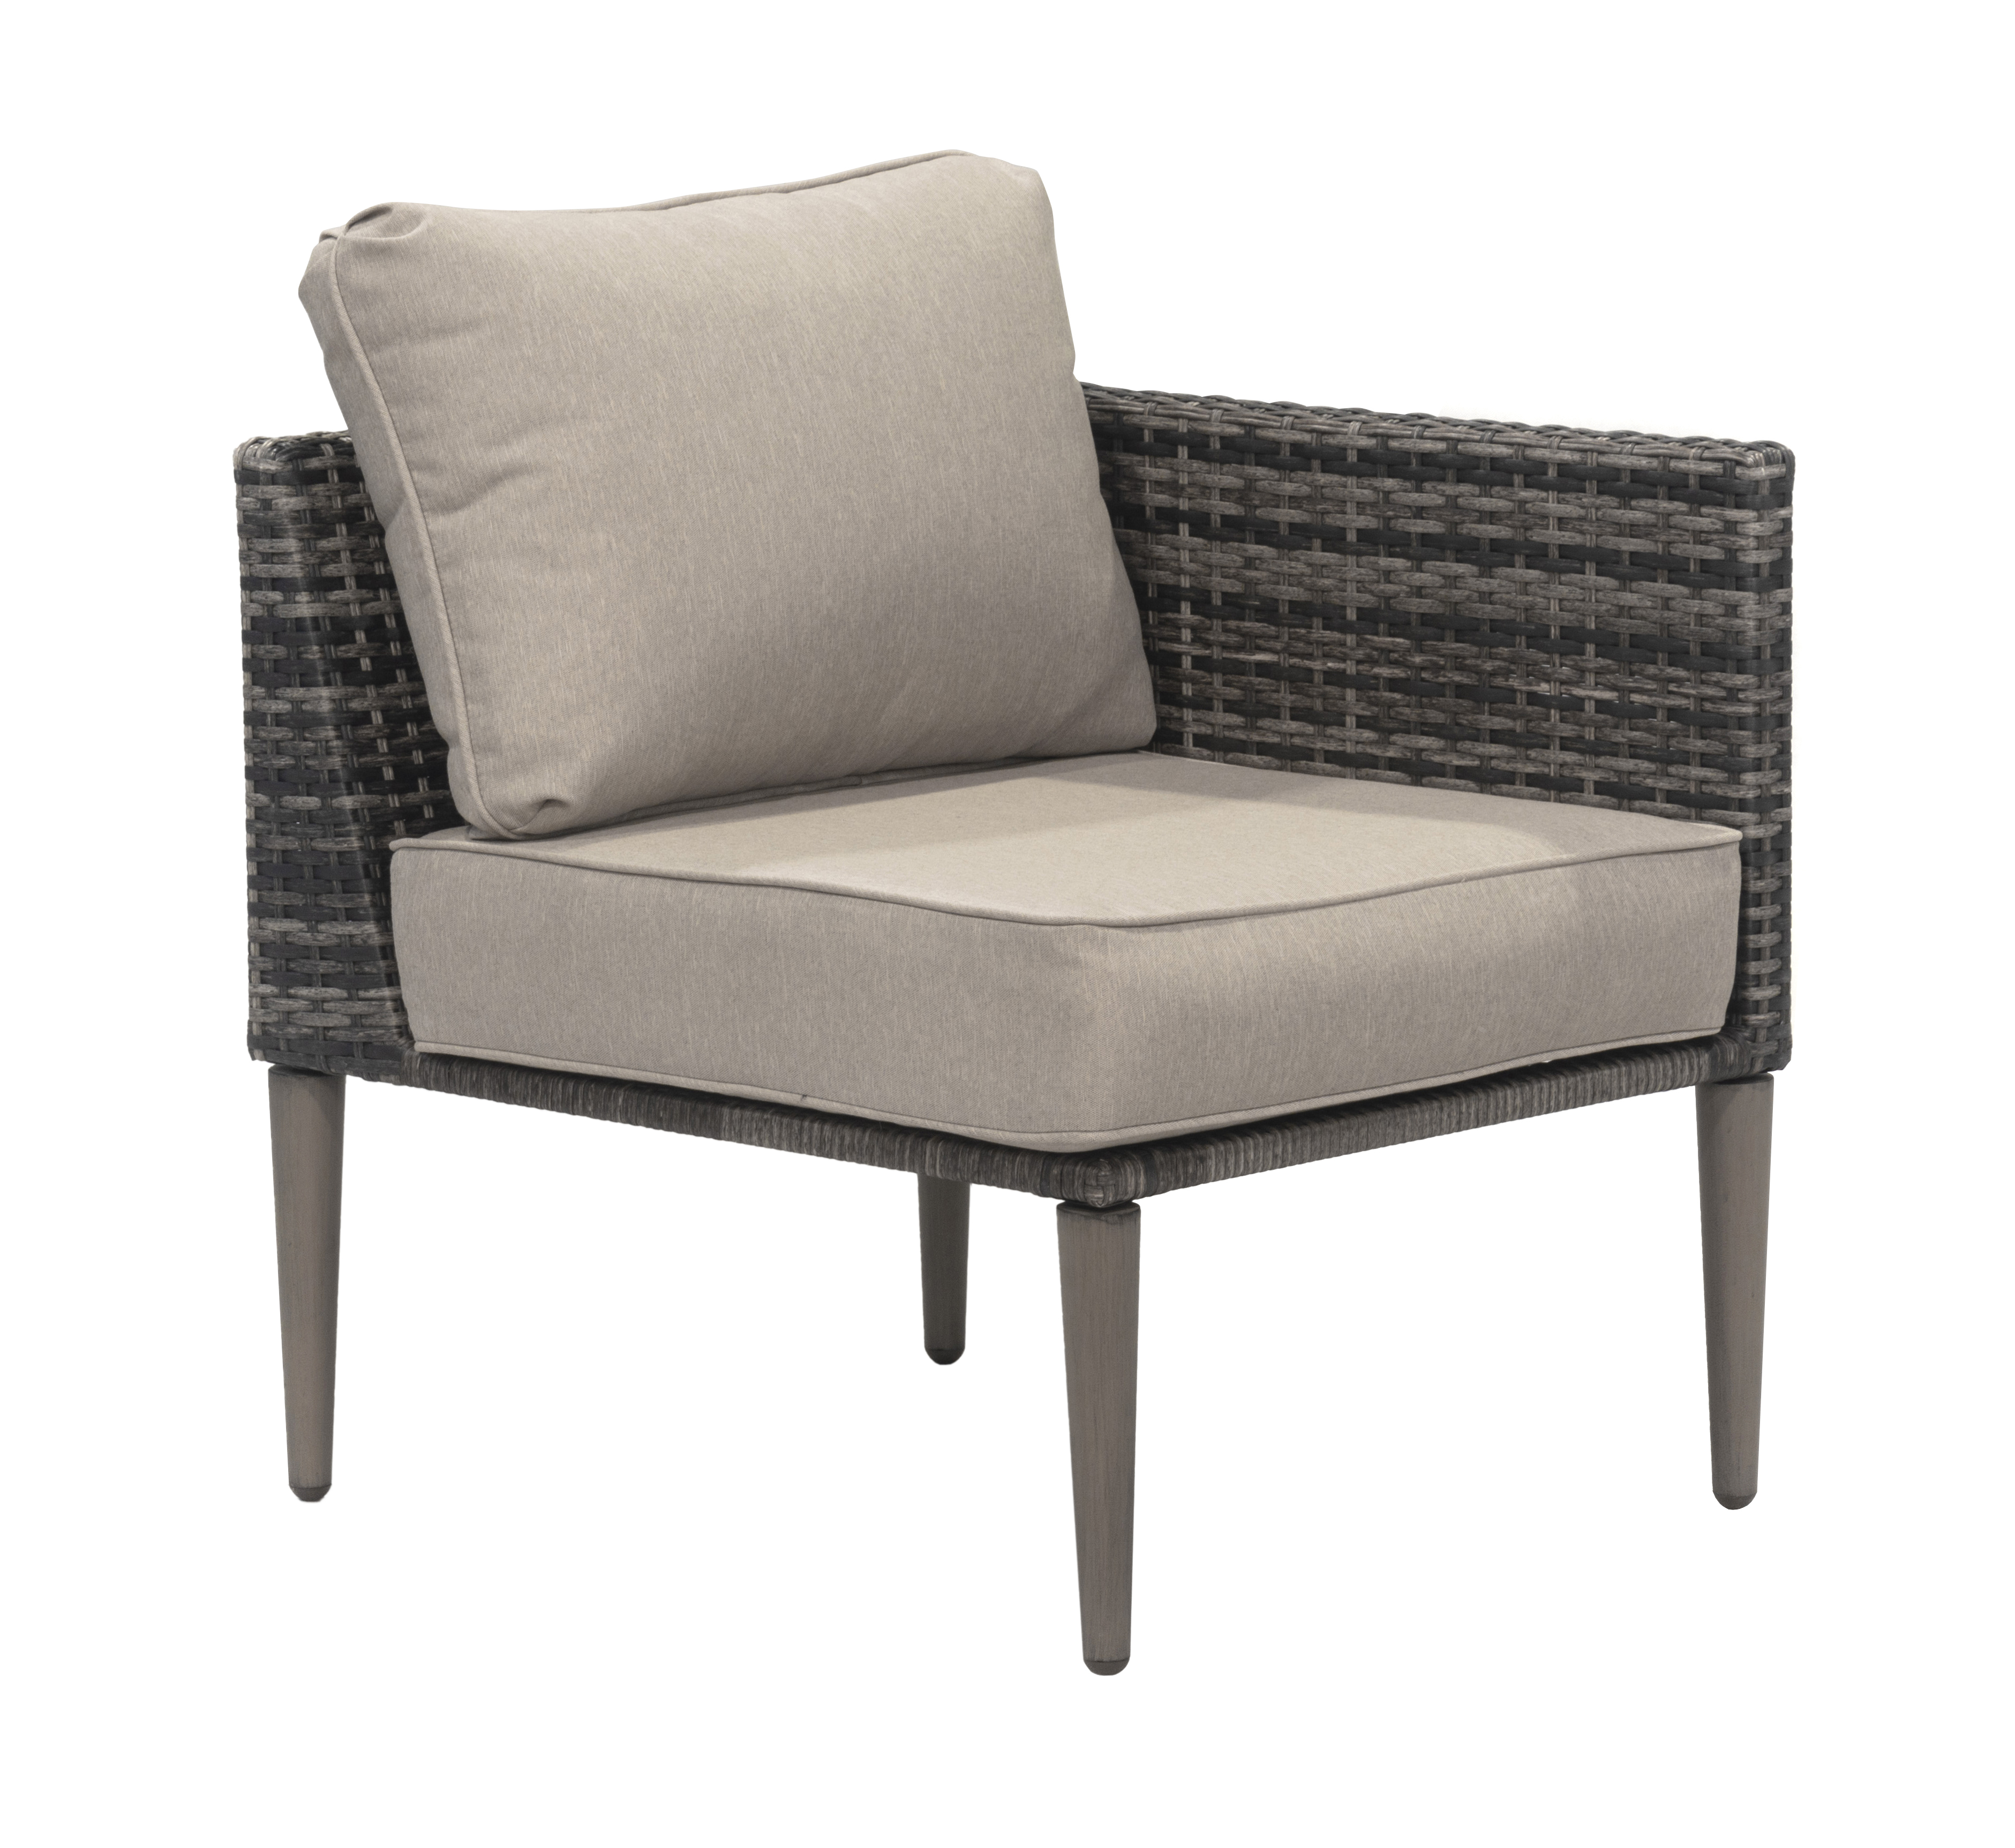 Donglin Outdoor Patio Furniture Sutton Creek 7-Piece Steel Sectional Sofa PE Wicker Rattan Set,Gray - image 3 of 16